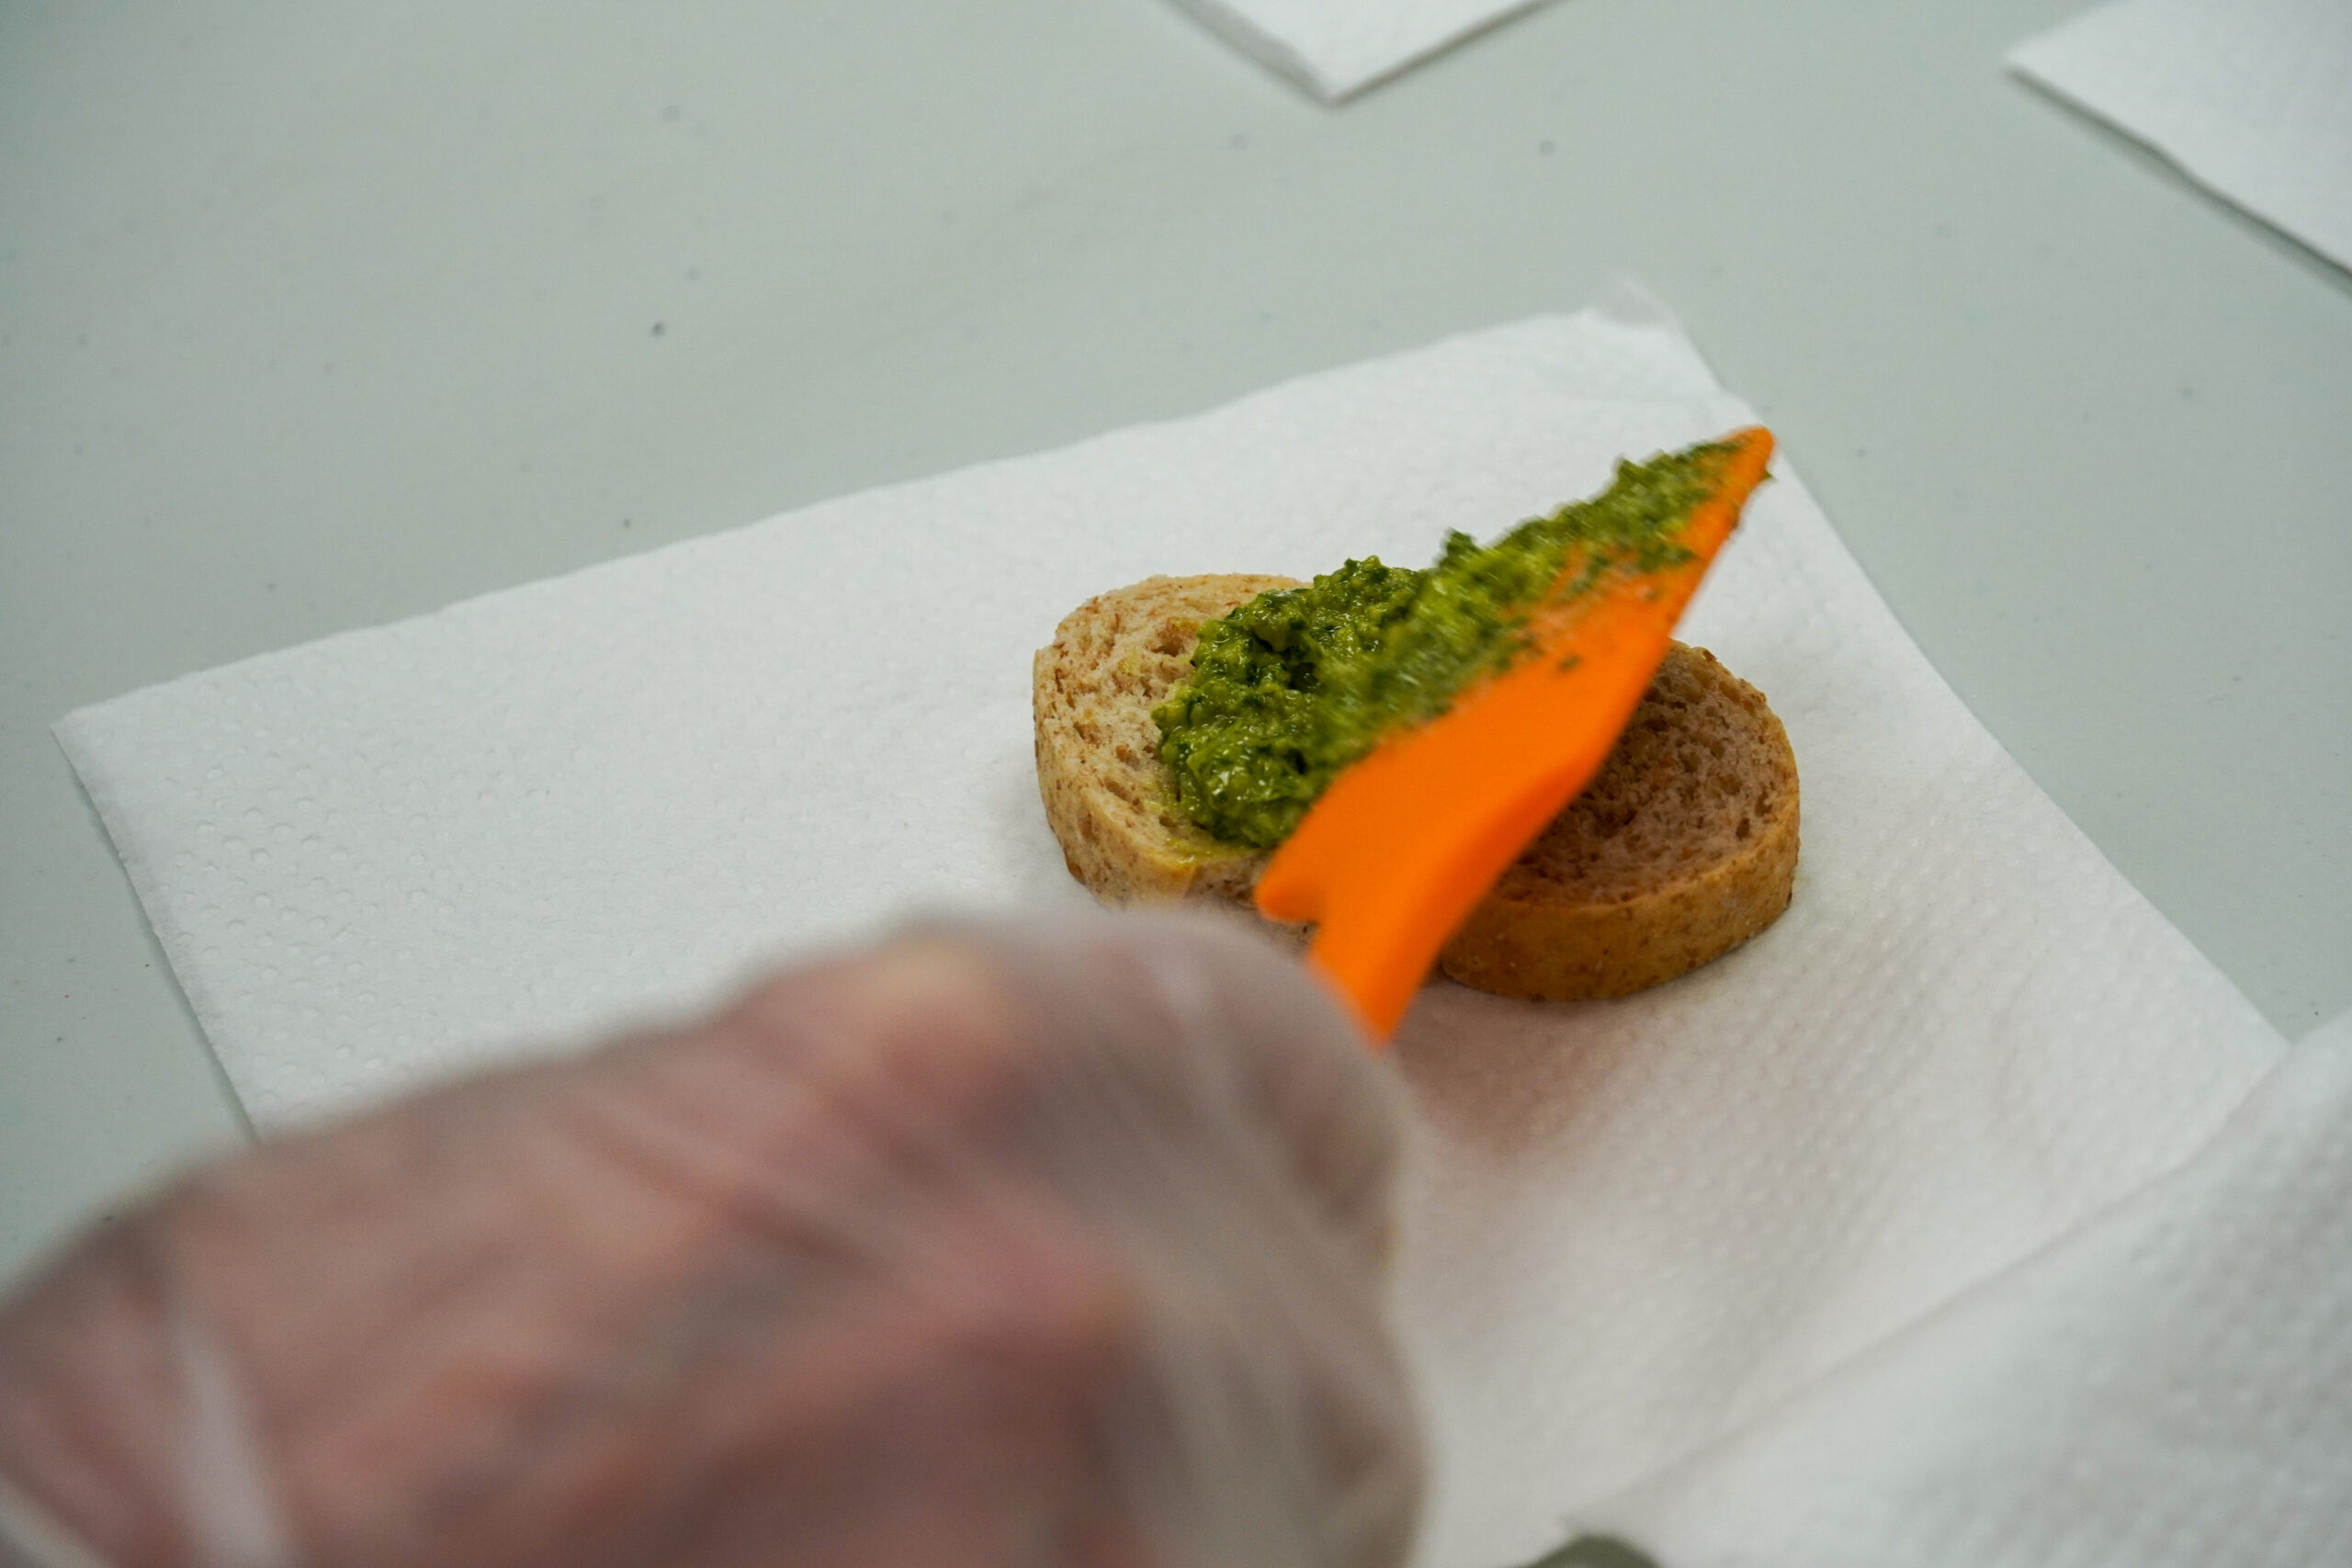 kale pesto being spread onto bread